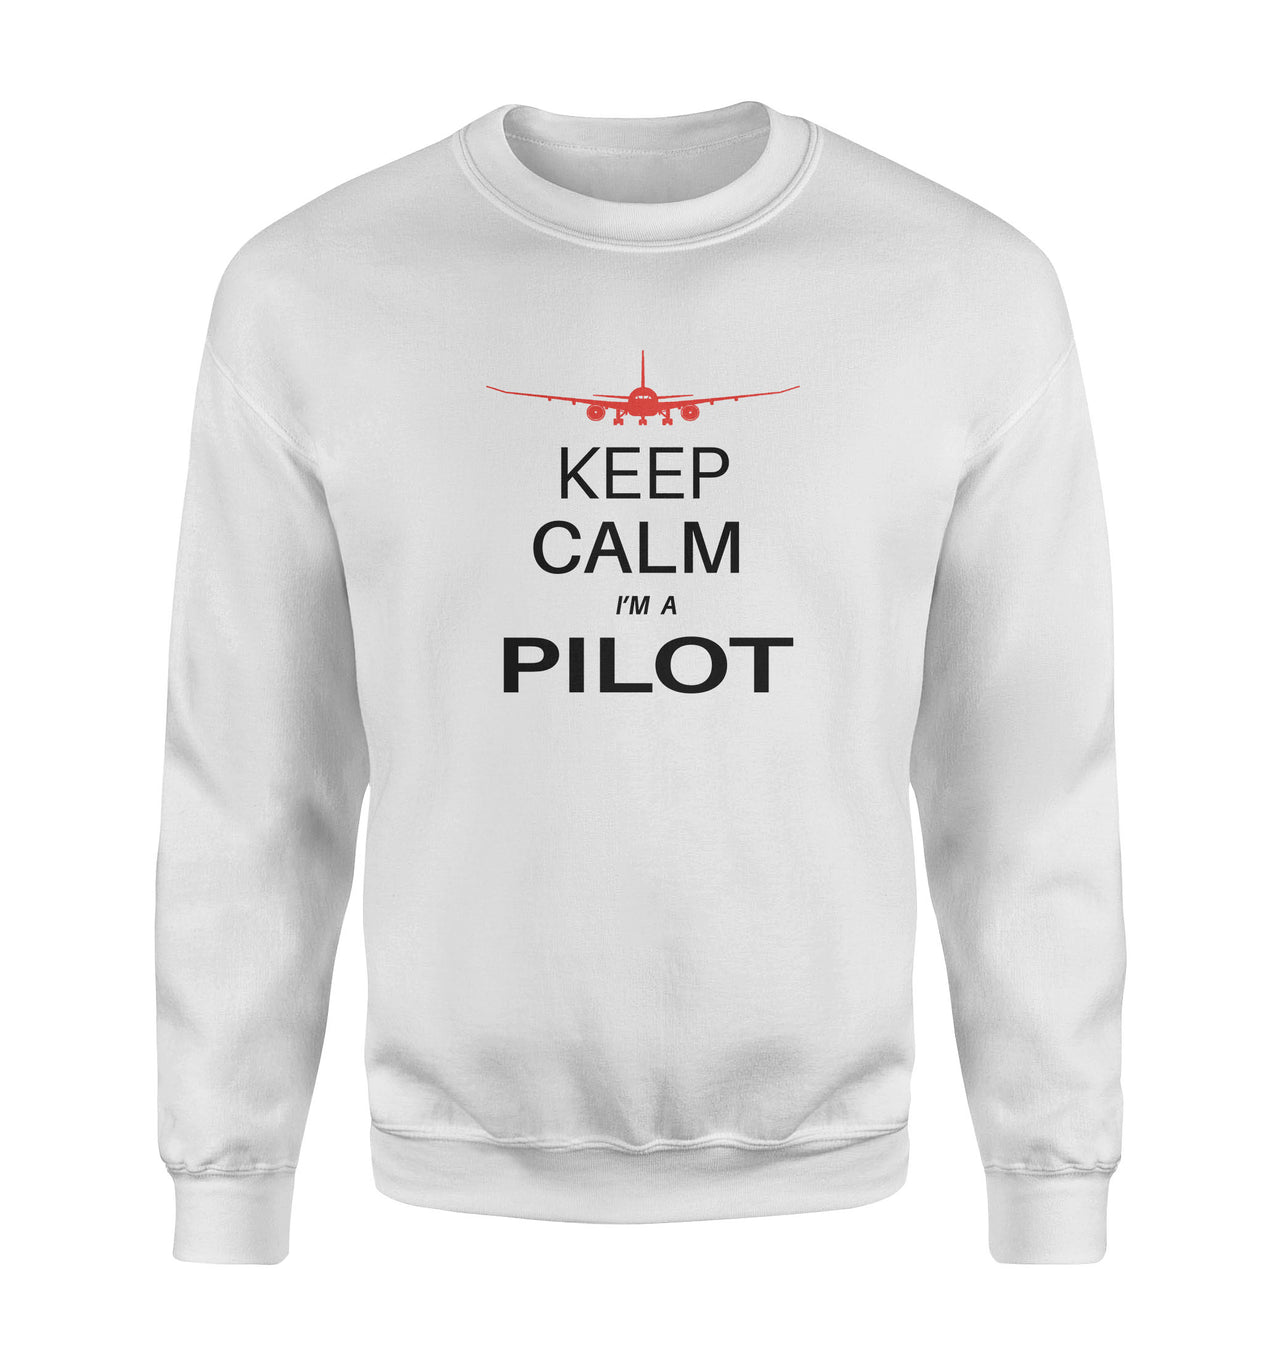 Pilot (777 Silhouette) Designed Sweatshirts